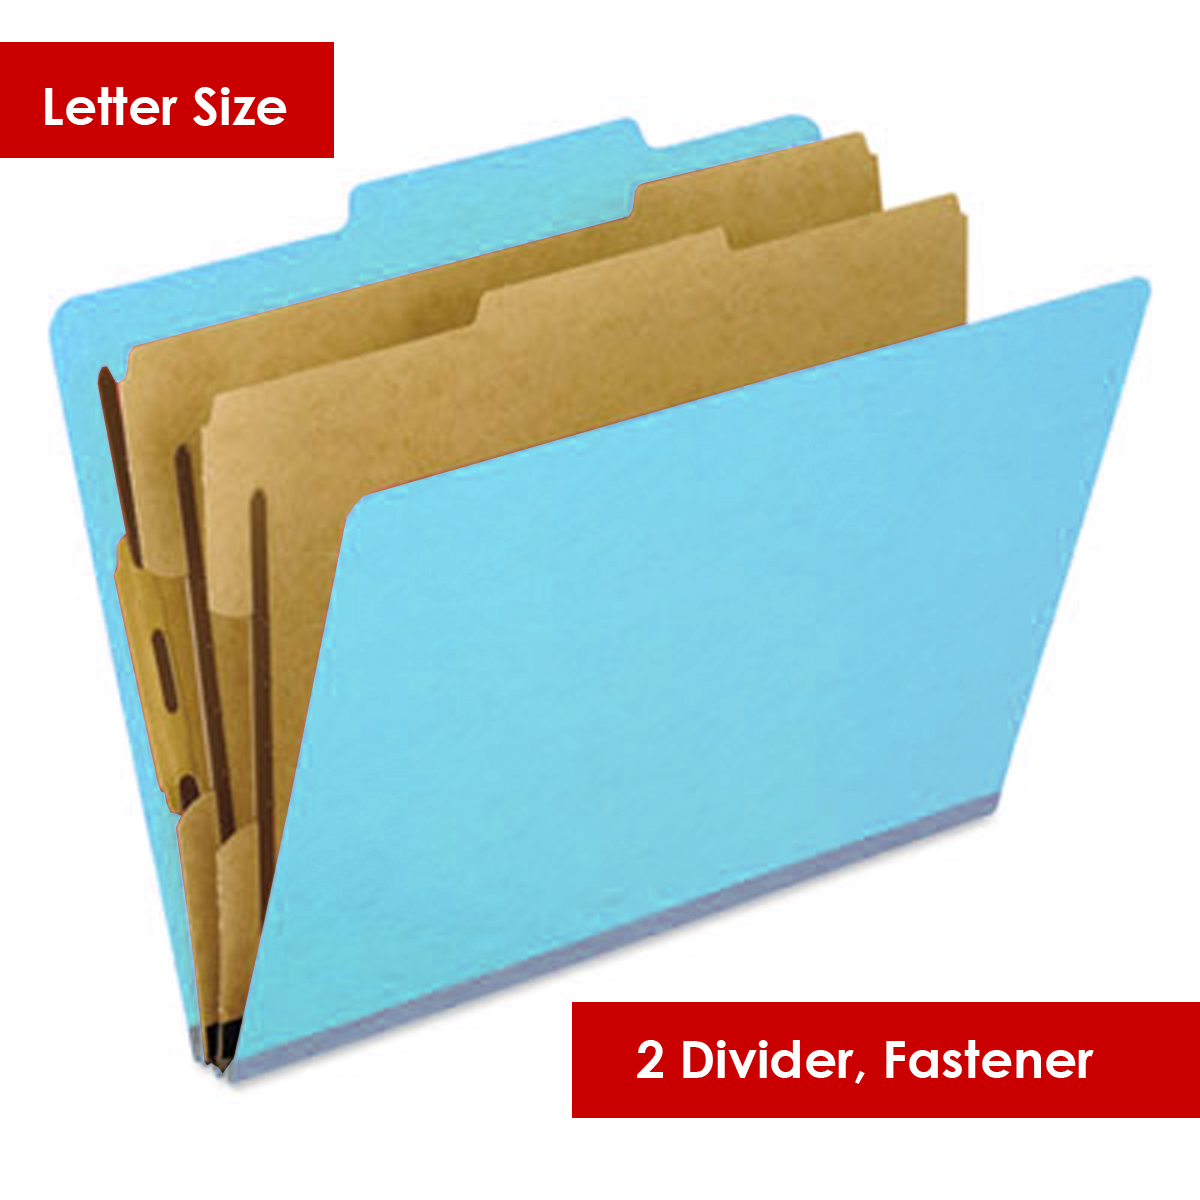 1 Divider Embedded Fasteners Yellow Letter Size 23734 2/5 Cut Tab Standard Pendaflex Classification Folders 10/BX 